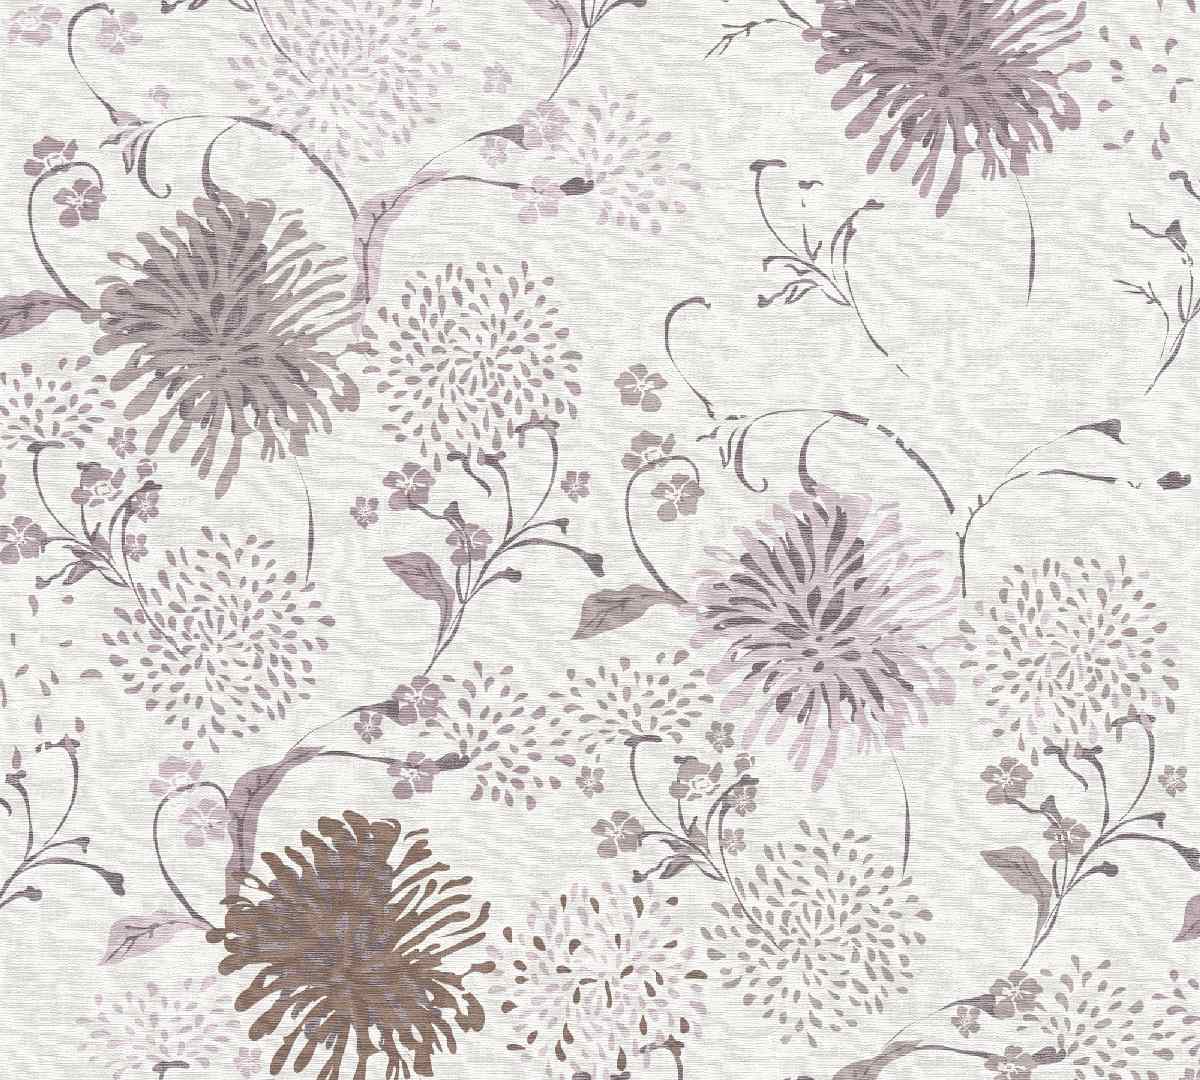 Vliestapete House of Turnowsky 389001 - Florale Tapete Muster - Weiß, Lila